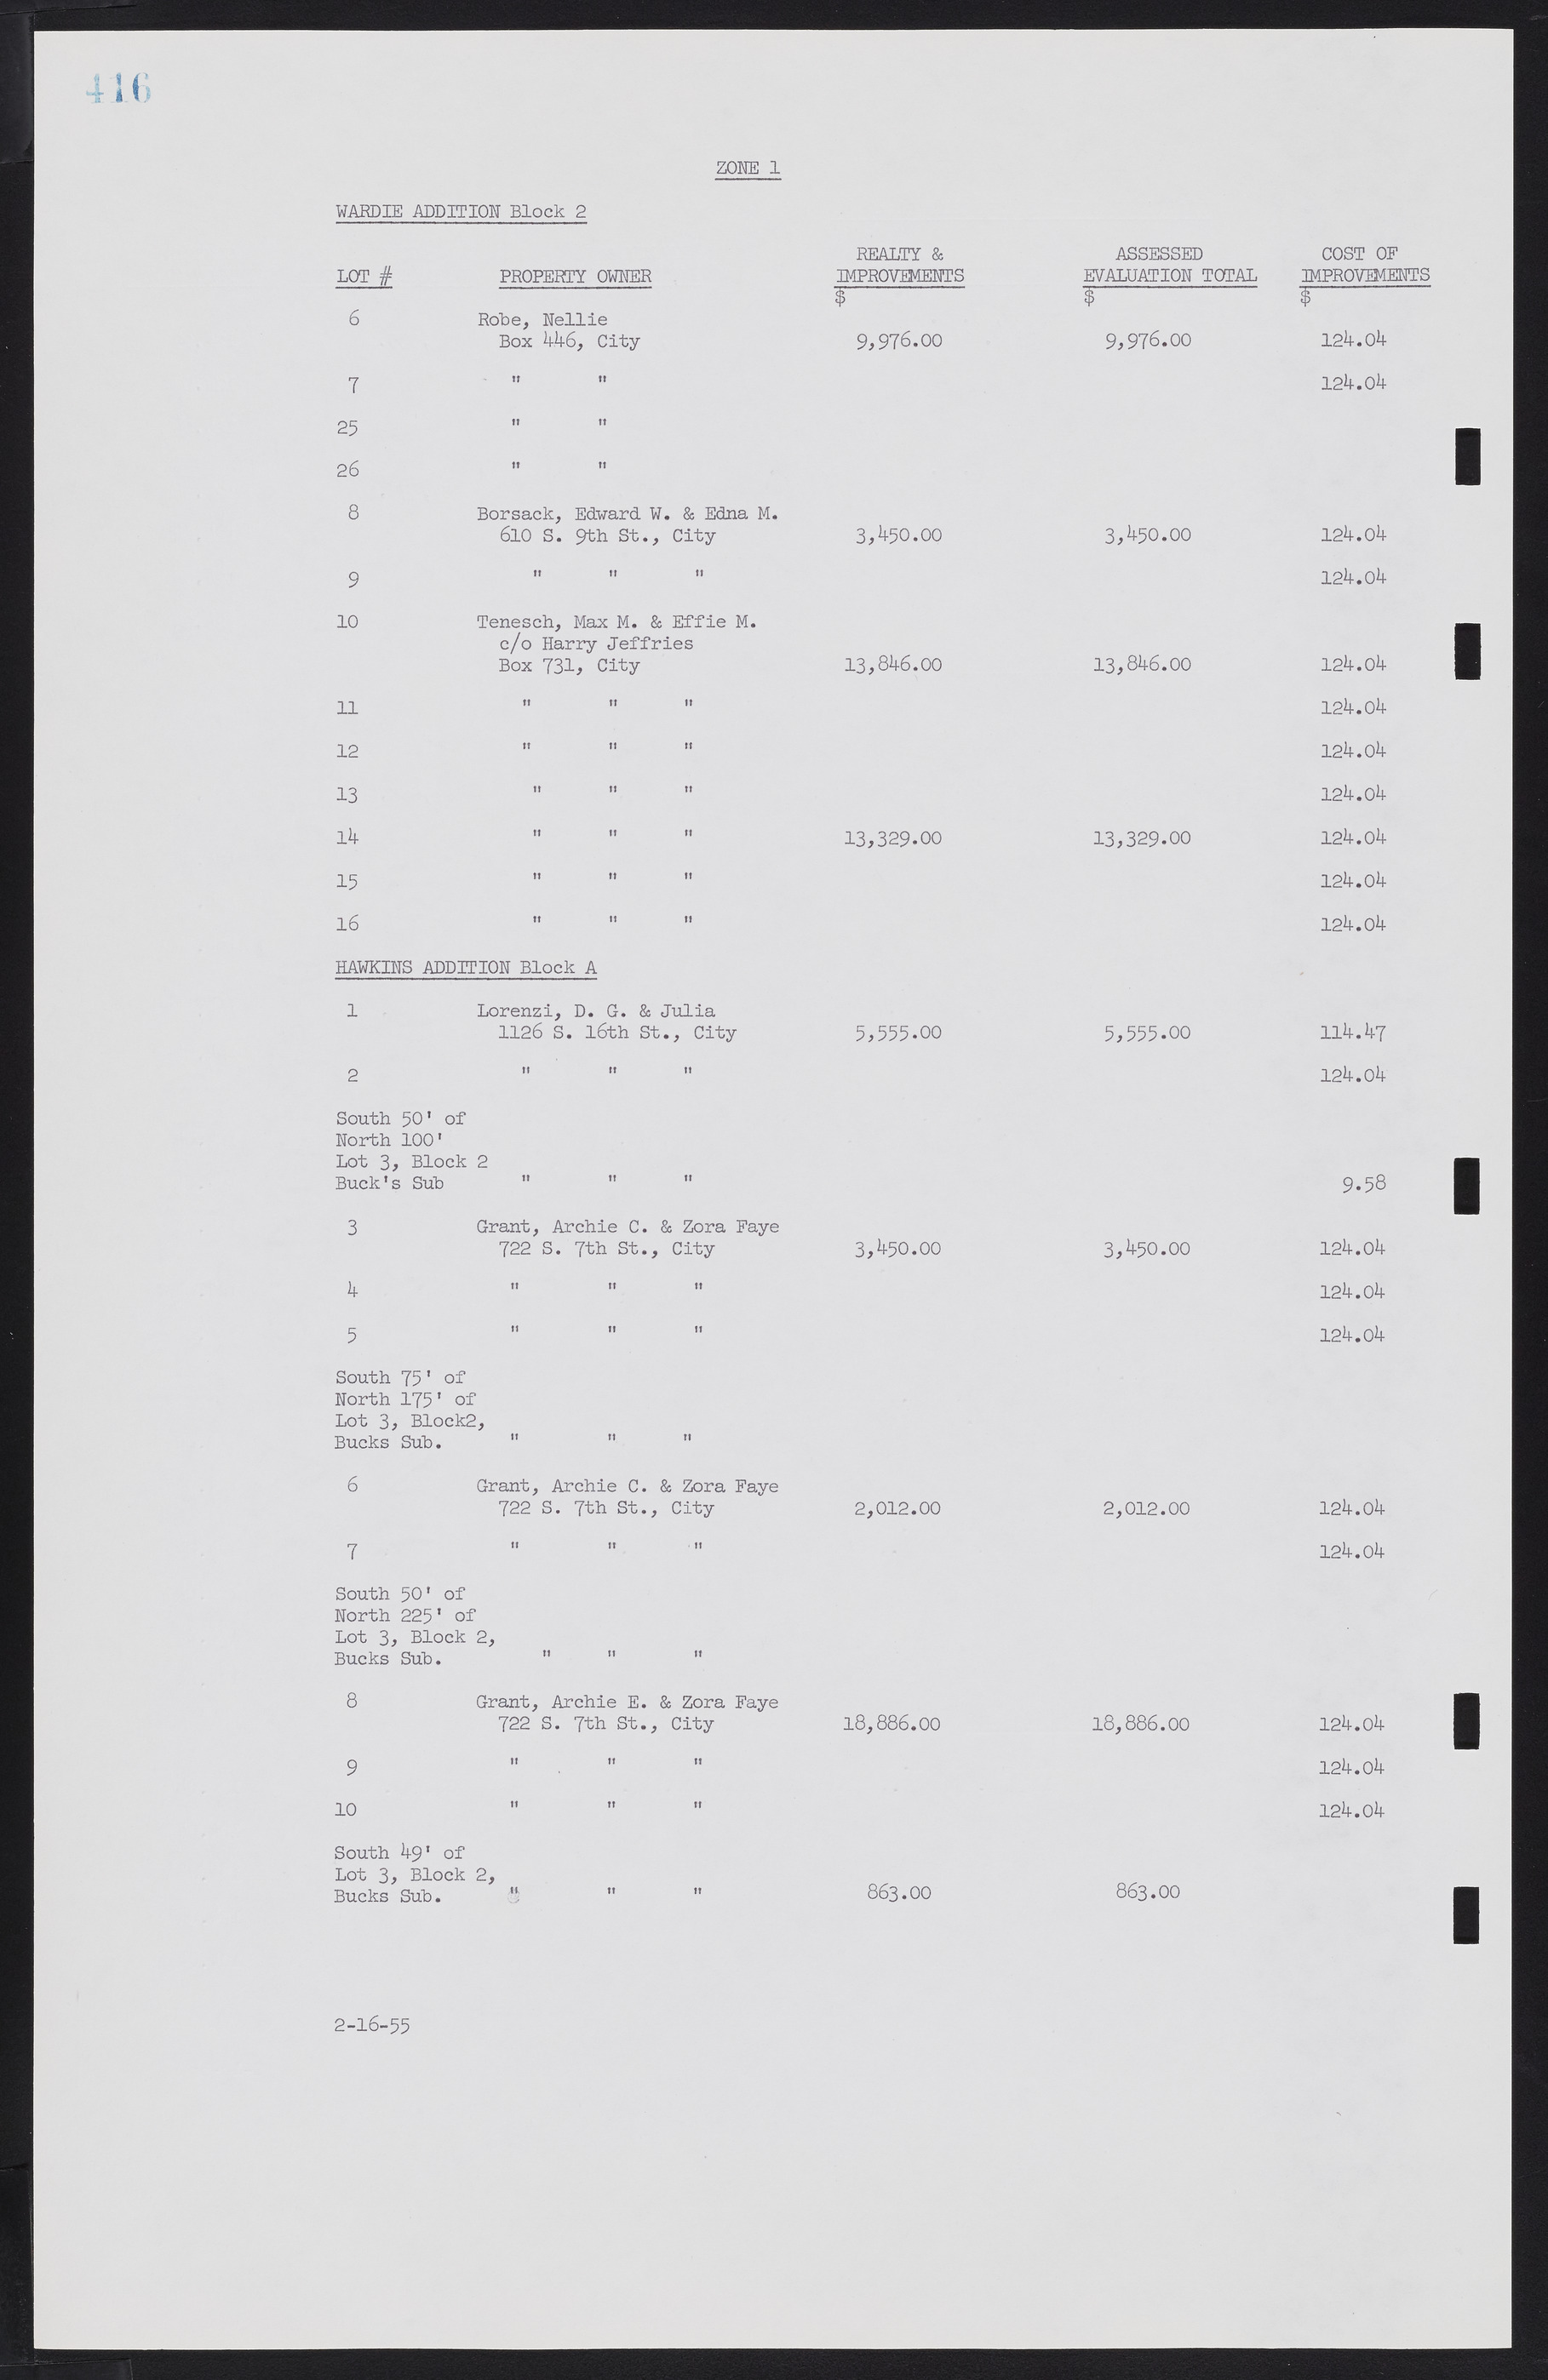 Las Vegas City Commission Minutes, February 17, 1954 to September 21, 1955, lvc000009-422